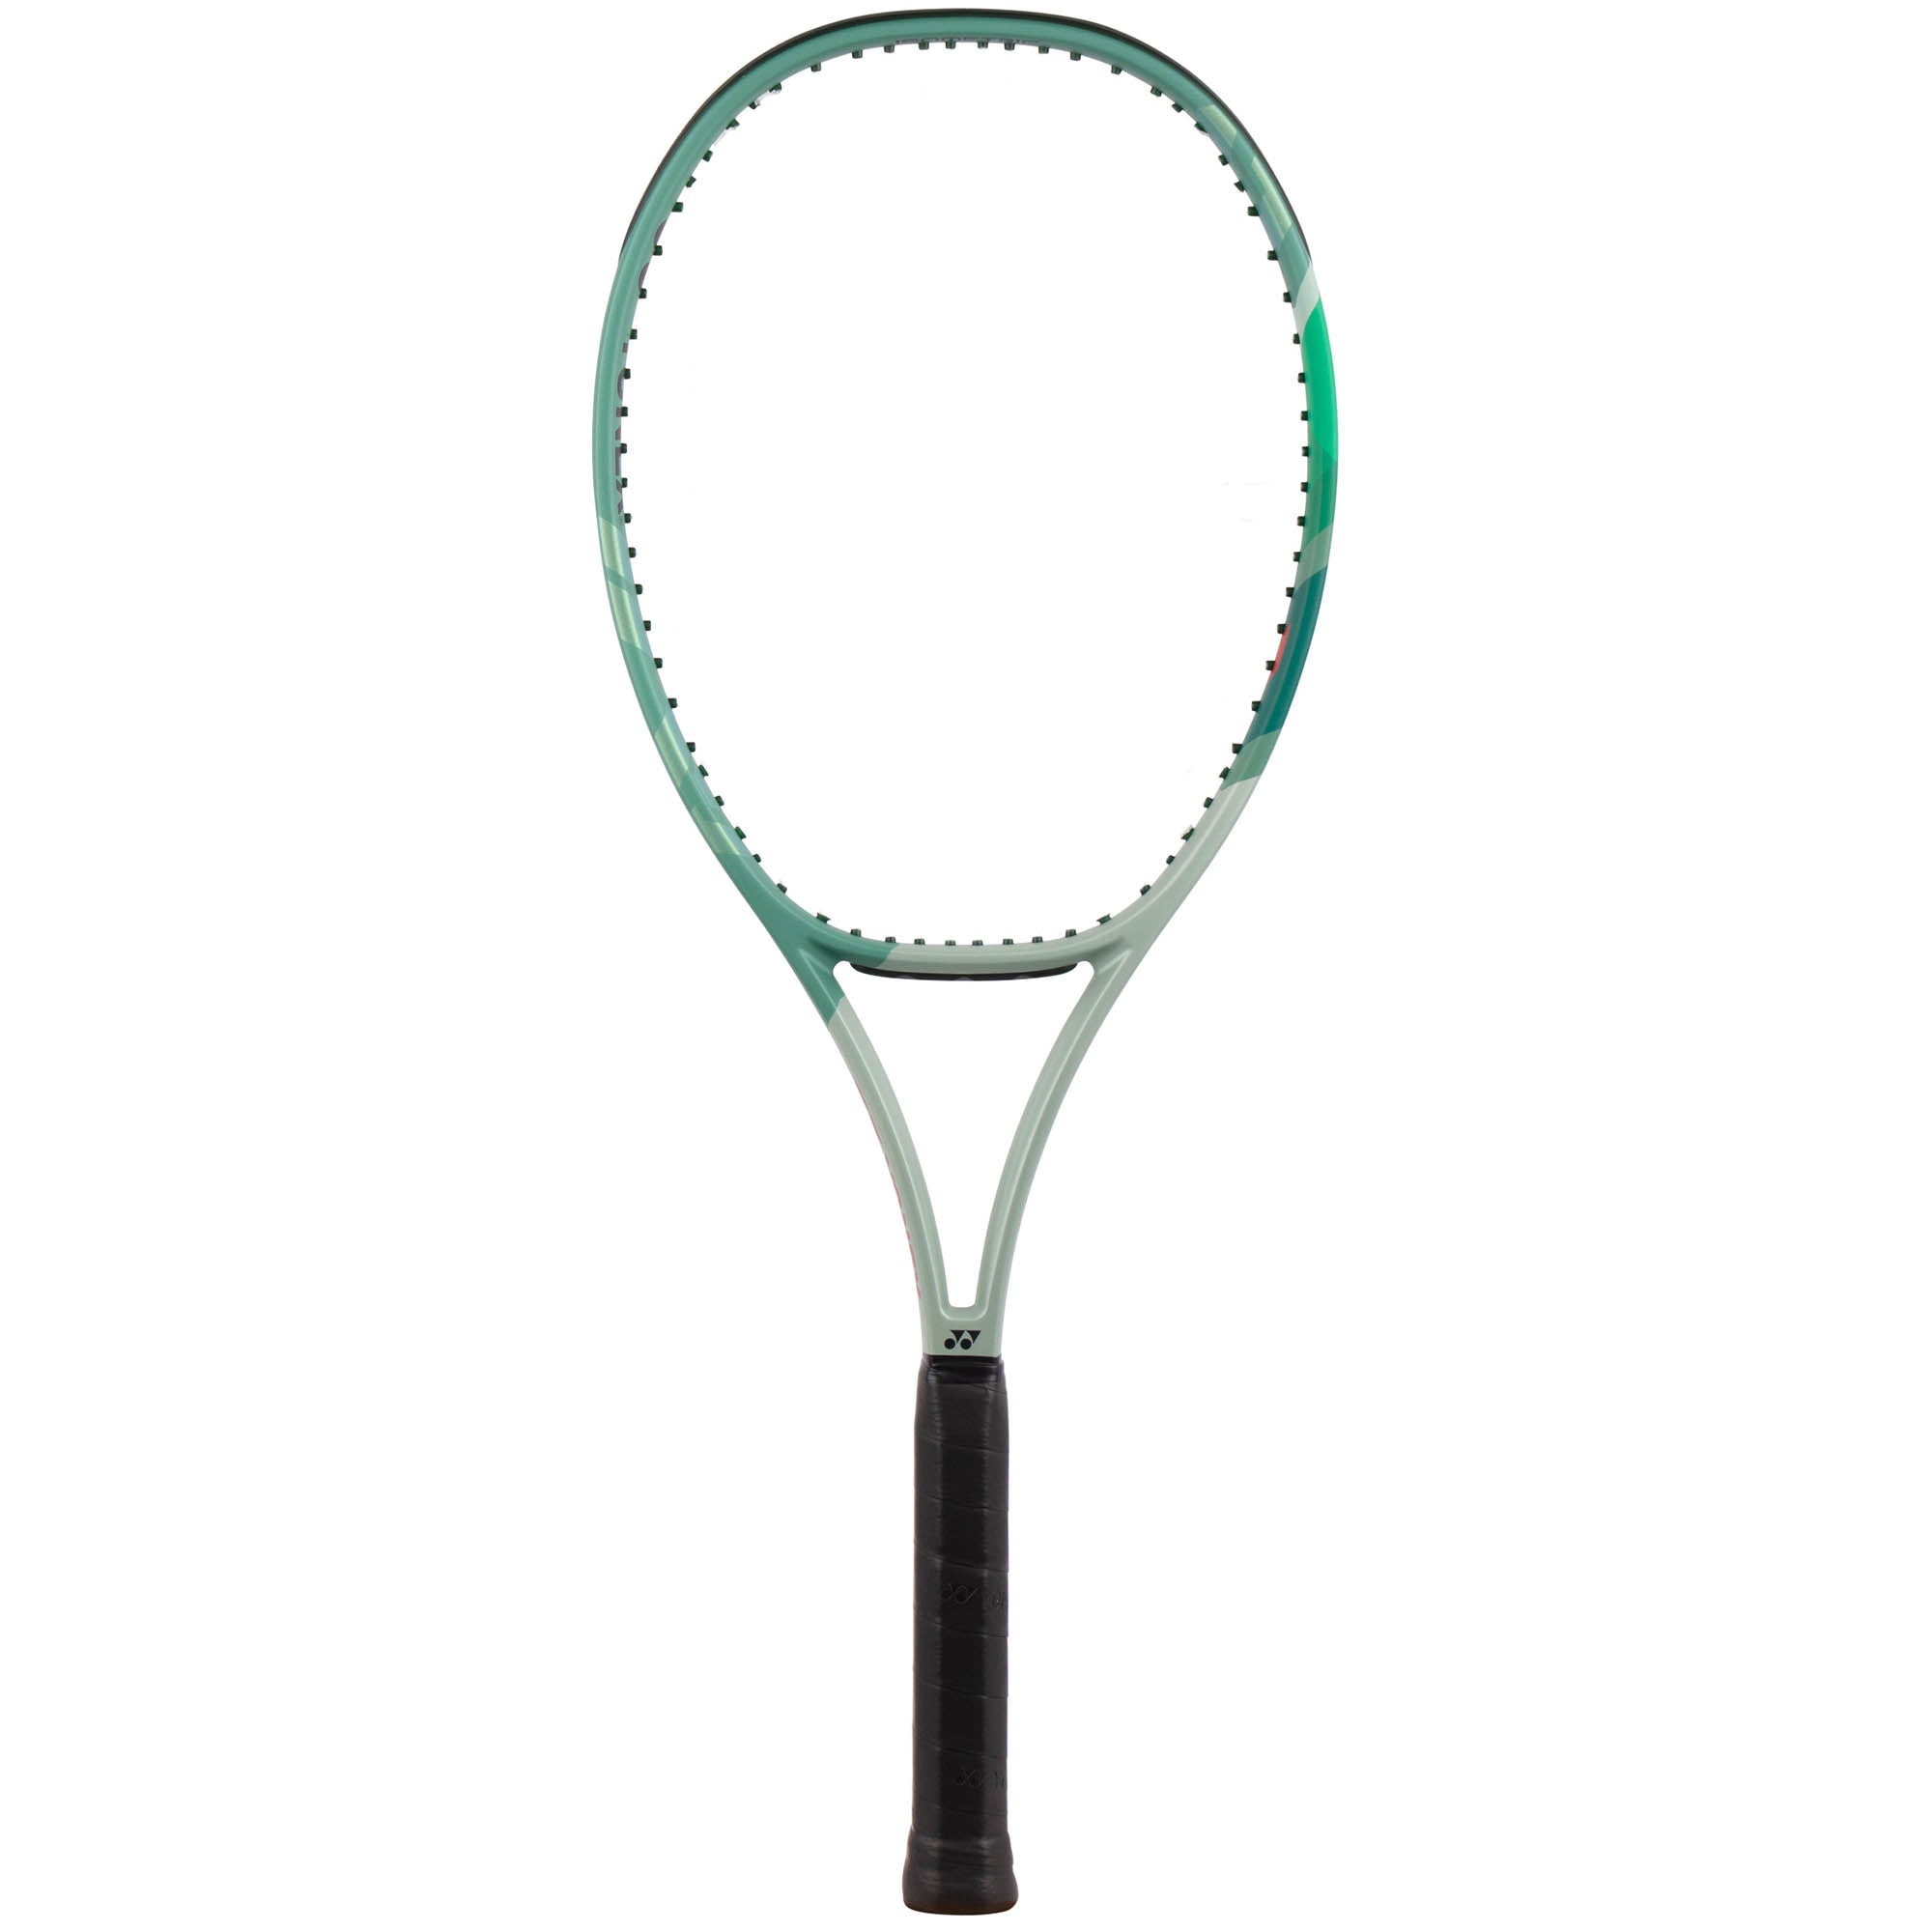 Yonex Percept Game Tennis Racket